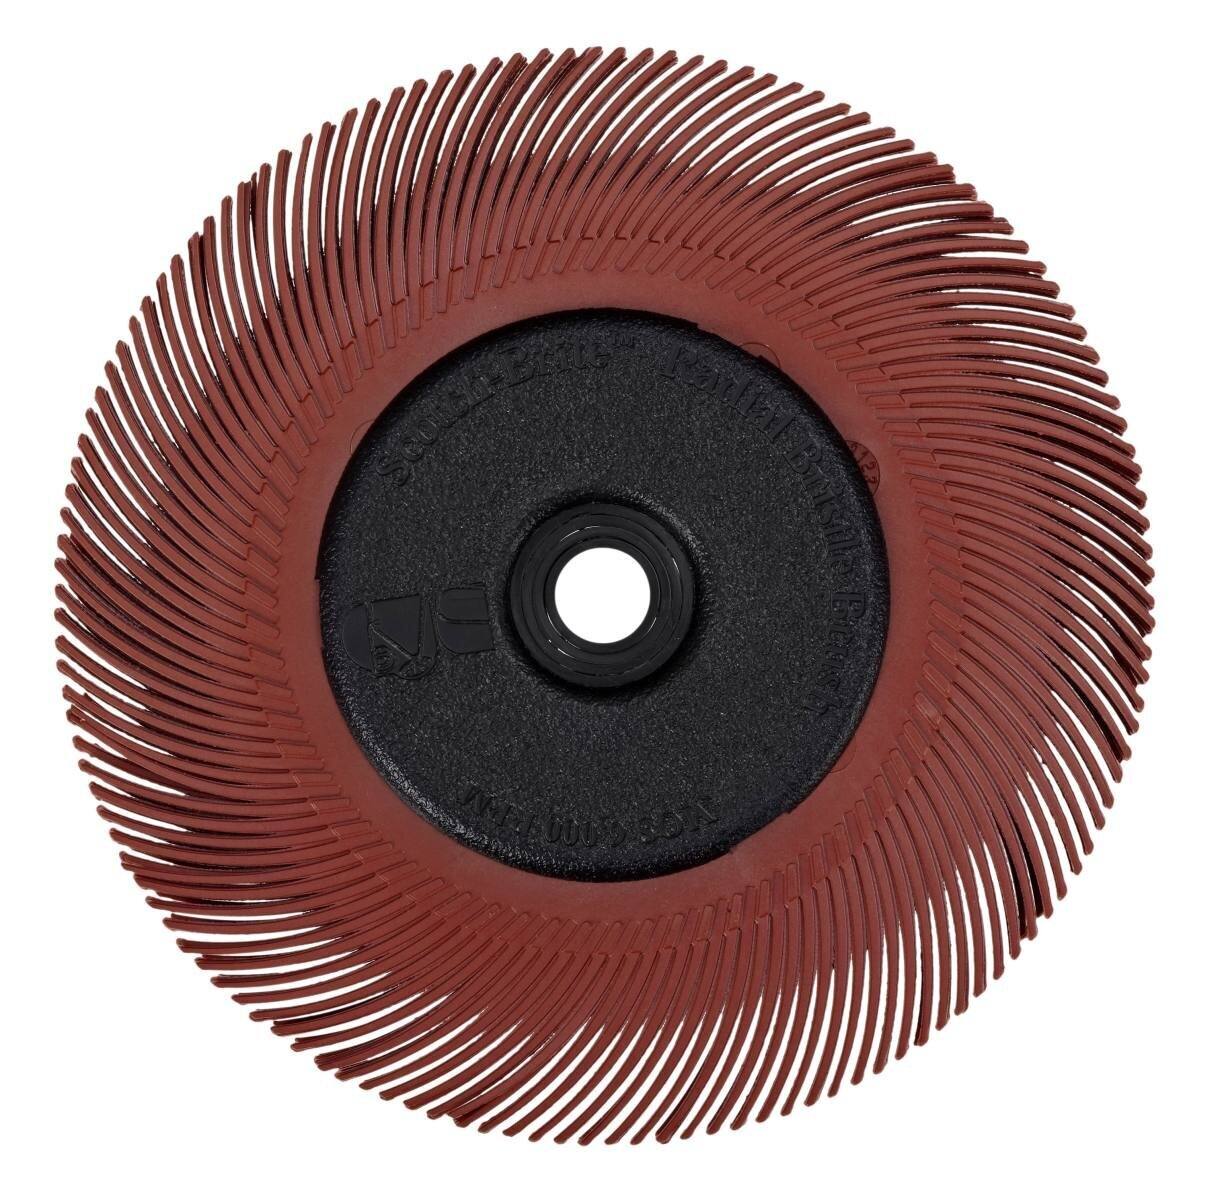 3M Scotch-Brite Radial Bristle Disc BB-ZB avec bride, rouge, 193,5 mm, P220, type C #33084